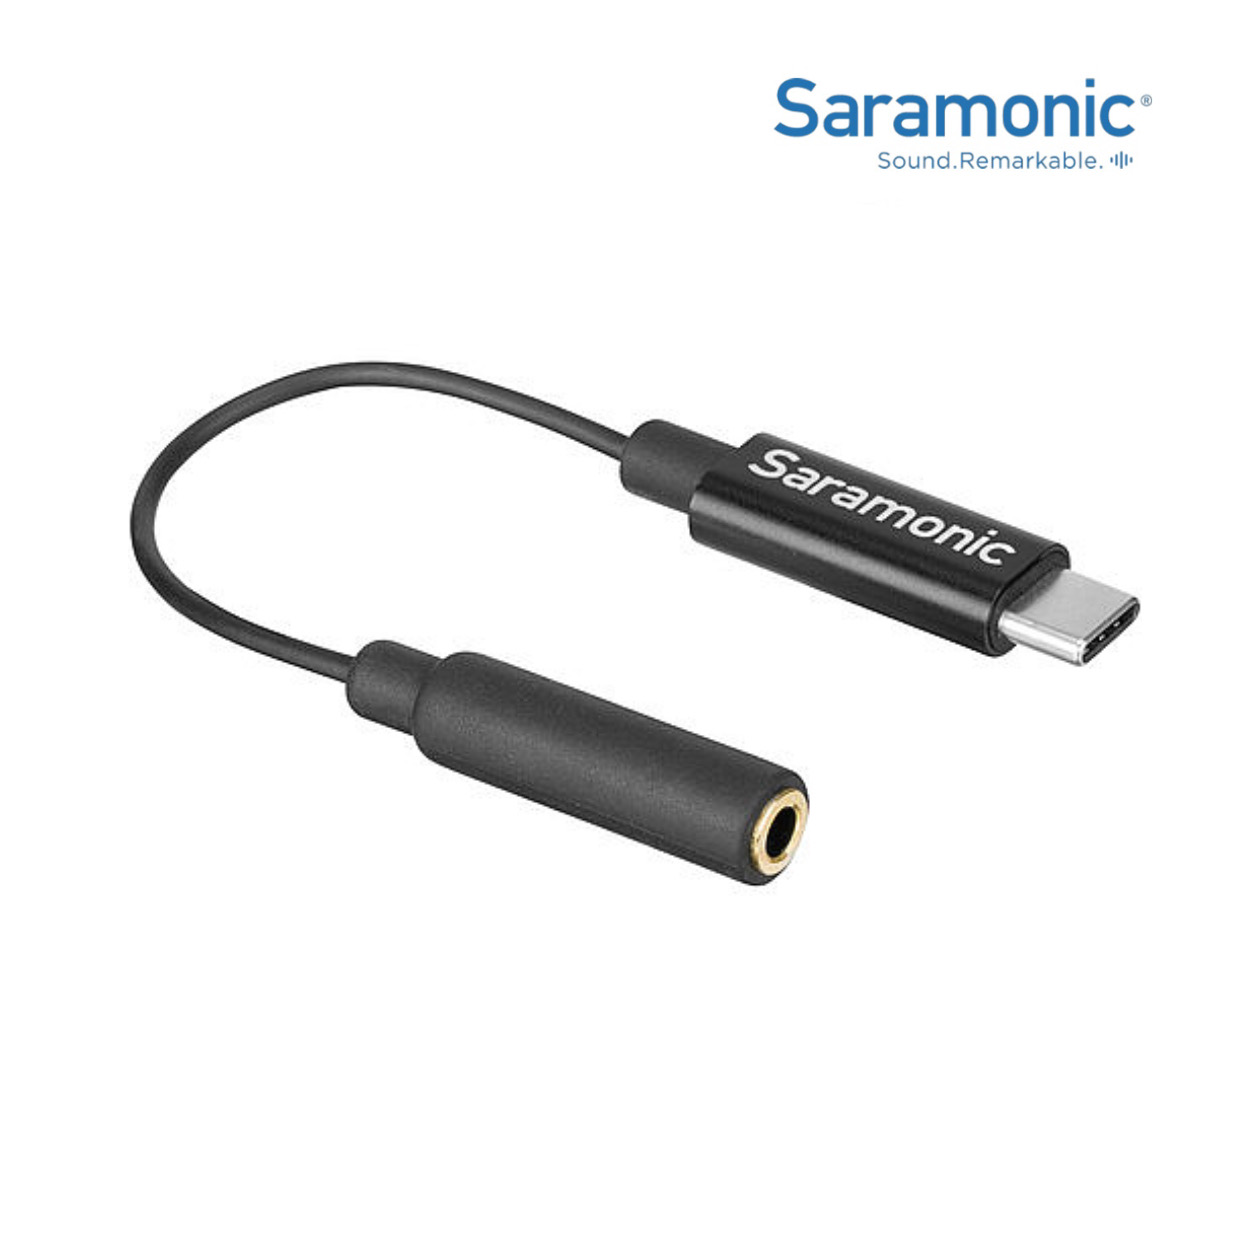  ‏Saramonic وصلة للسماعة USB إلى Type-c